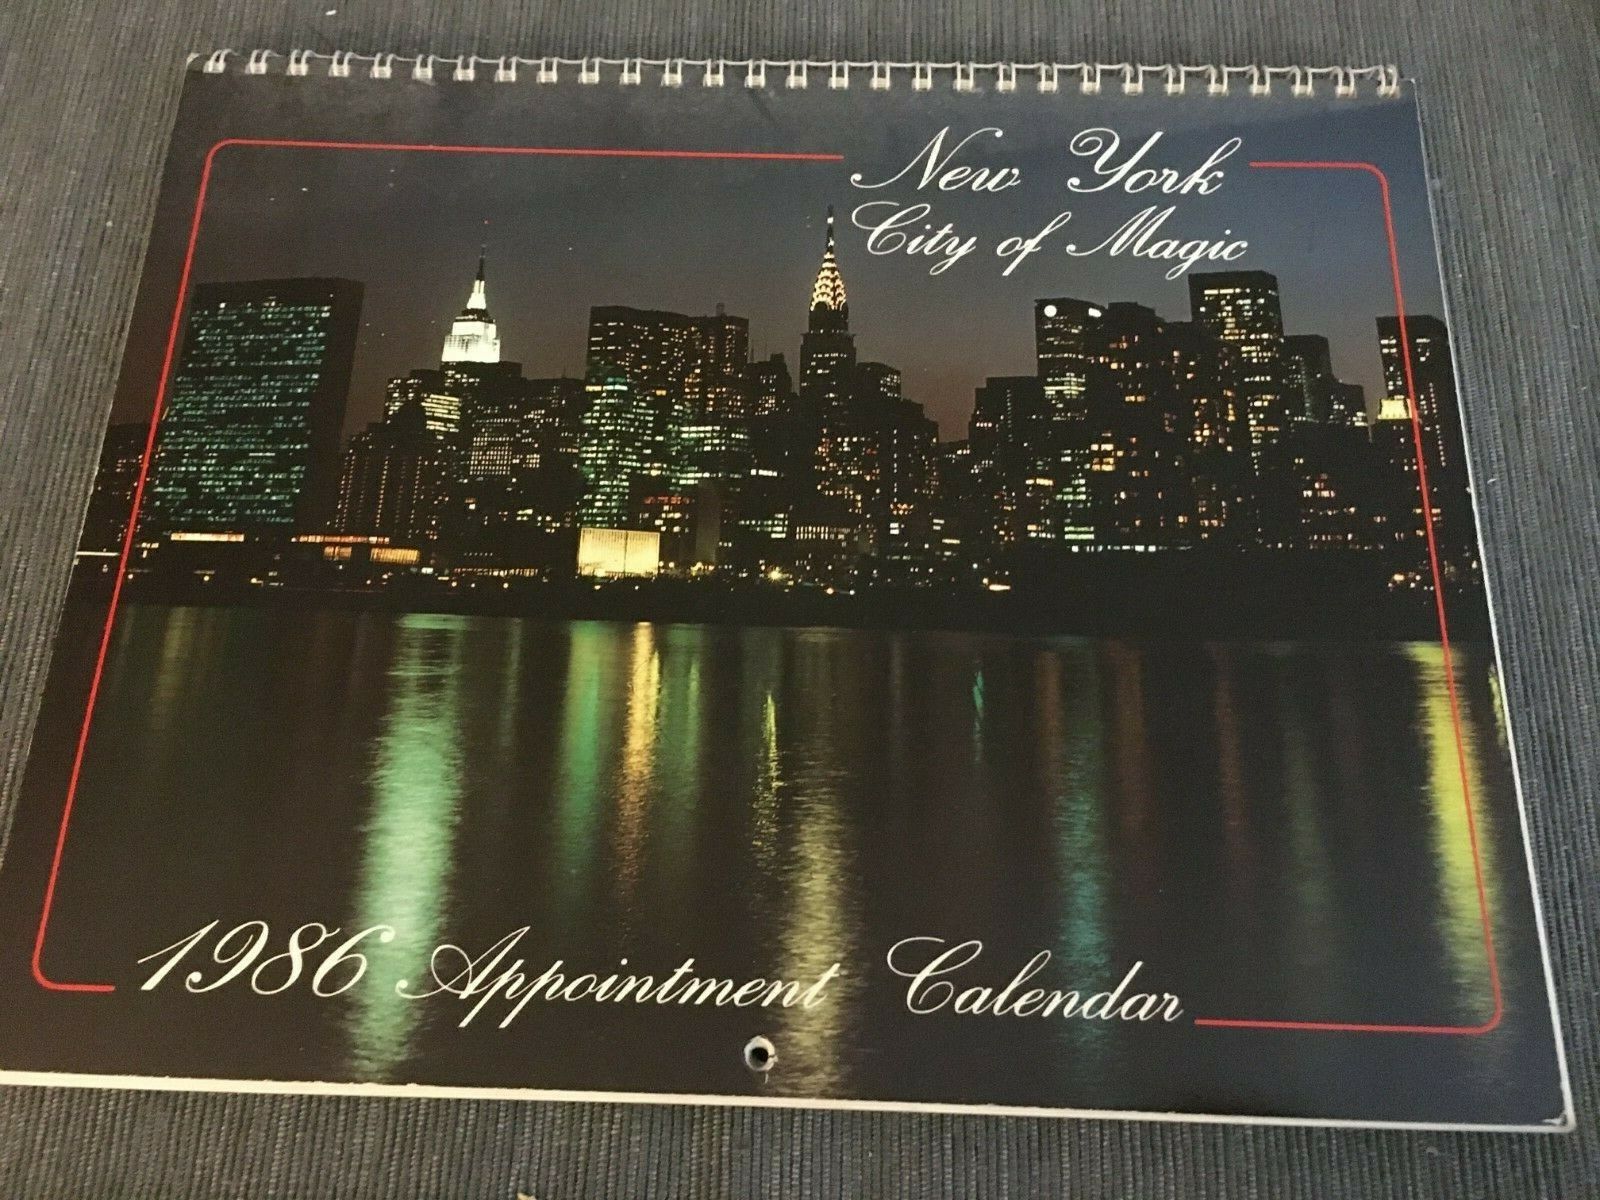 New York City NYC City of Magic 1986 Appointment Calendar unus...